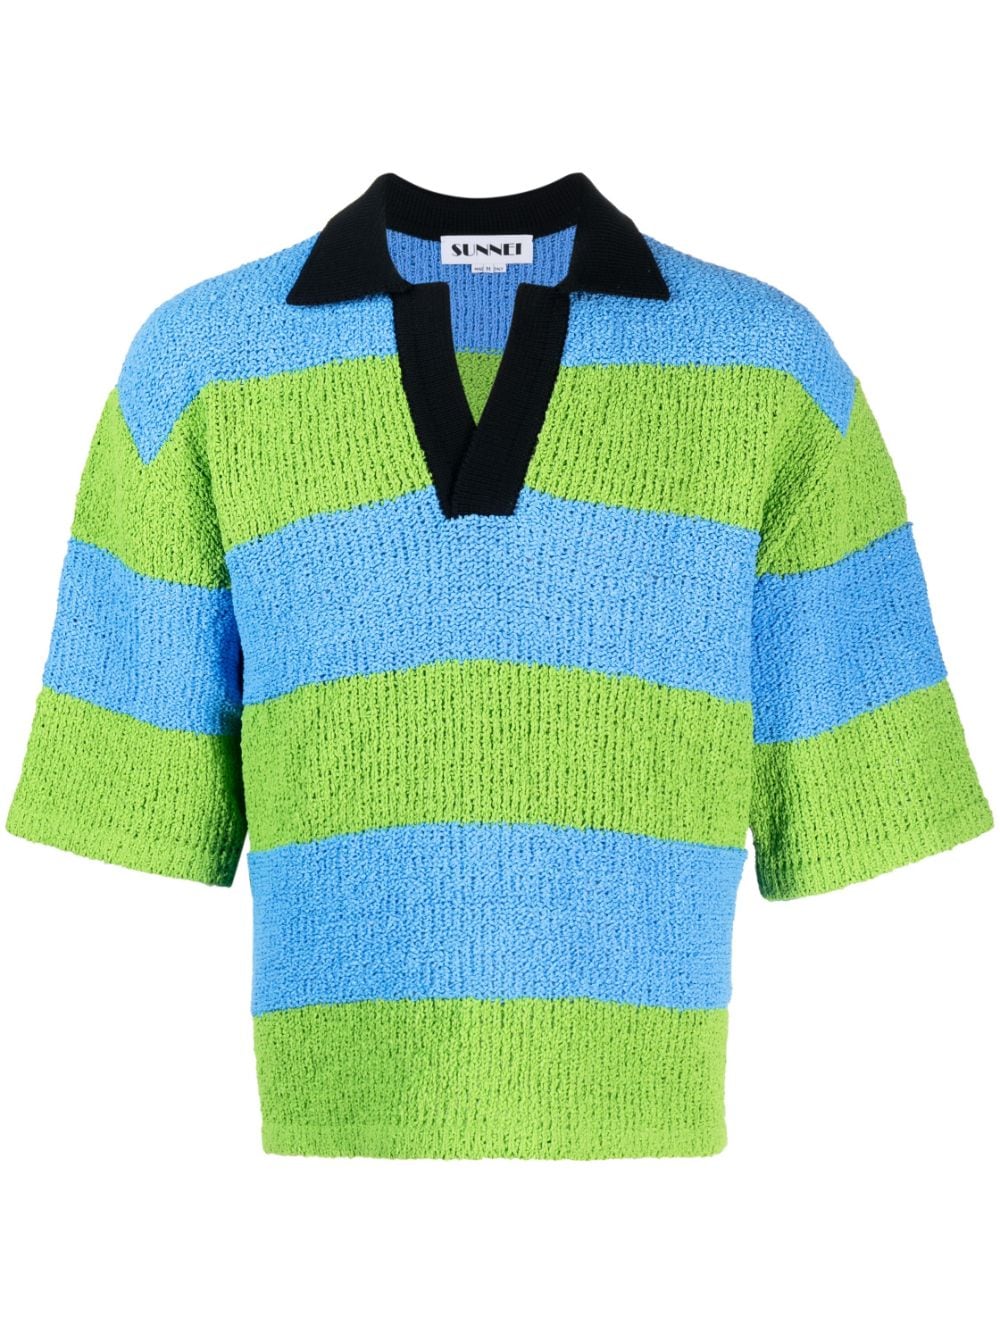 Sunnei striped knitted polo shirt - Blue von Sunnei